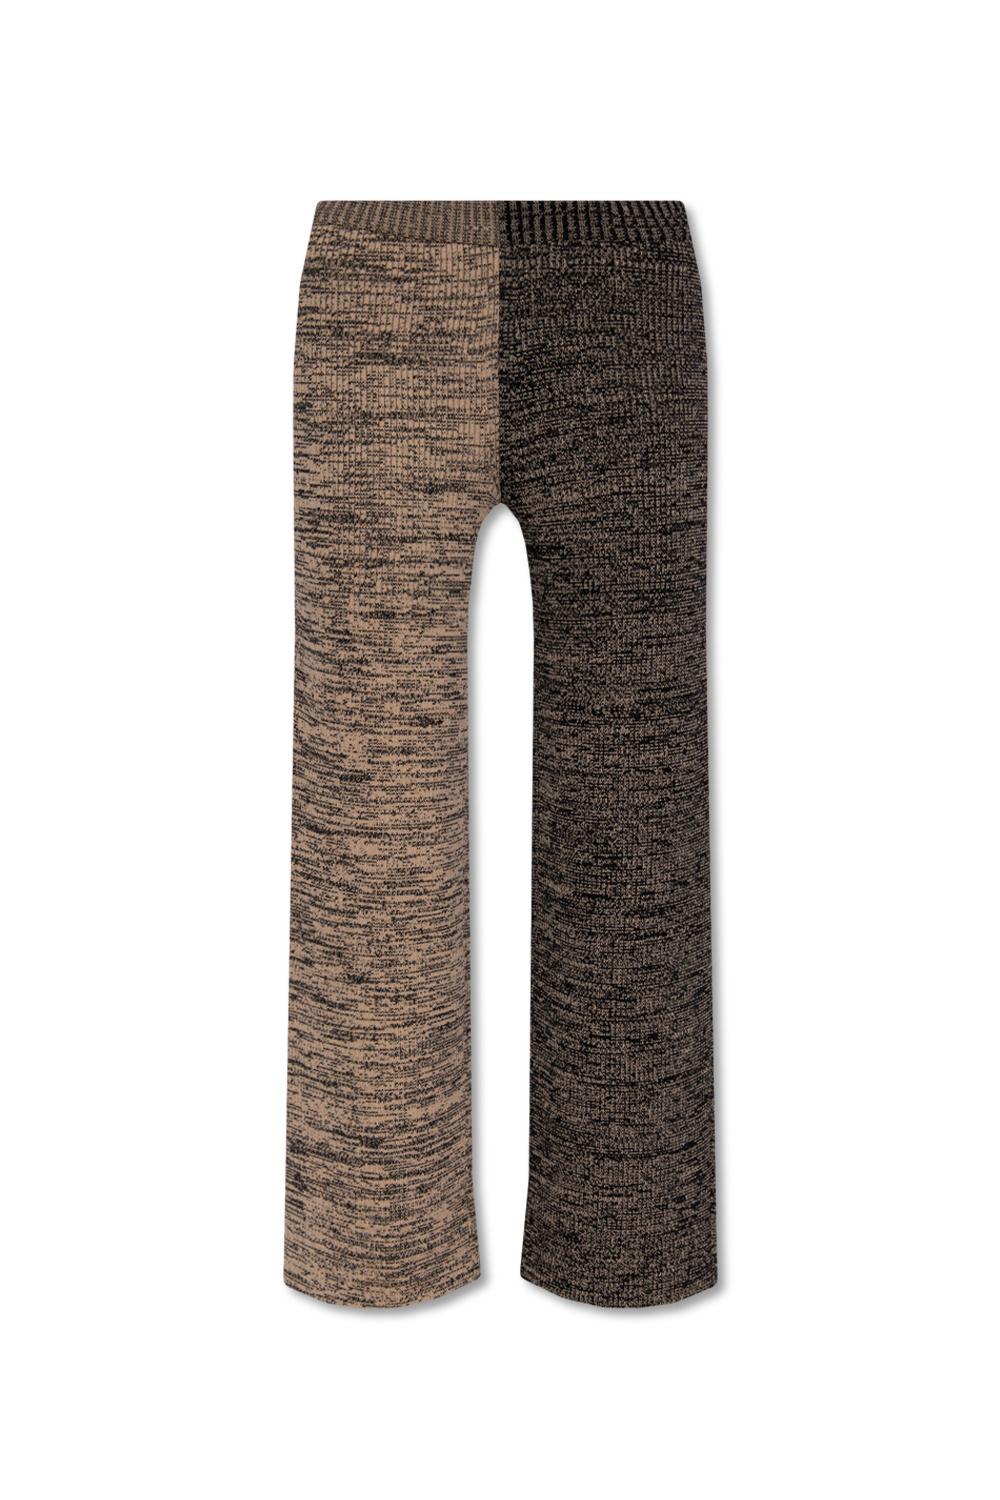 Aeron ‘Lia’ TWINSET trousers